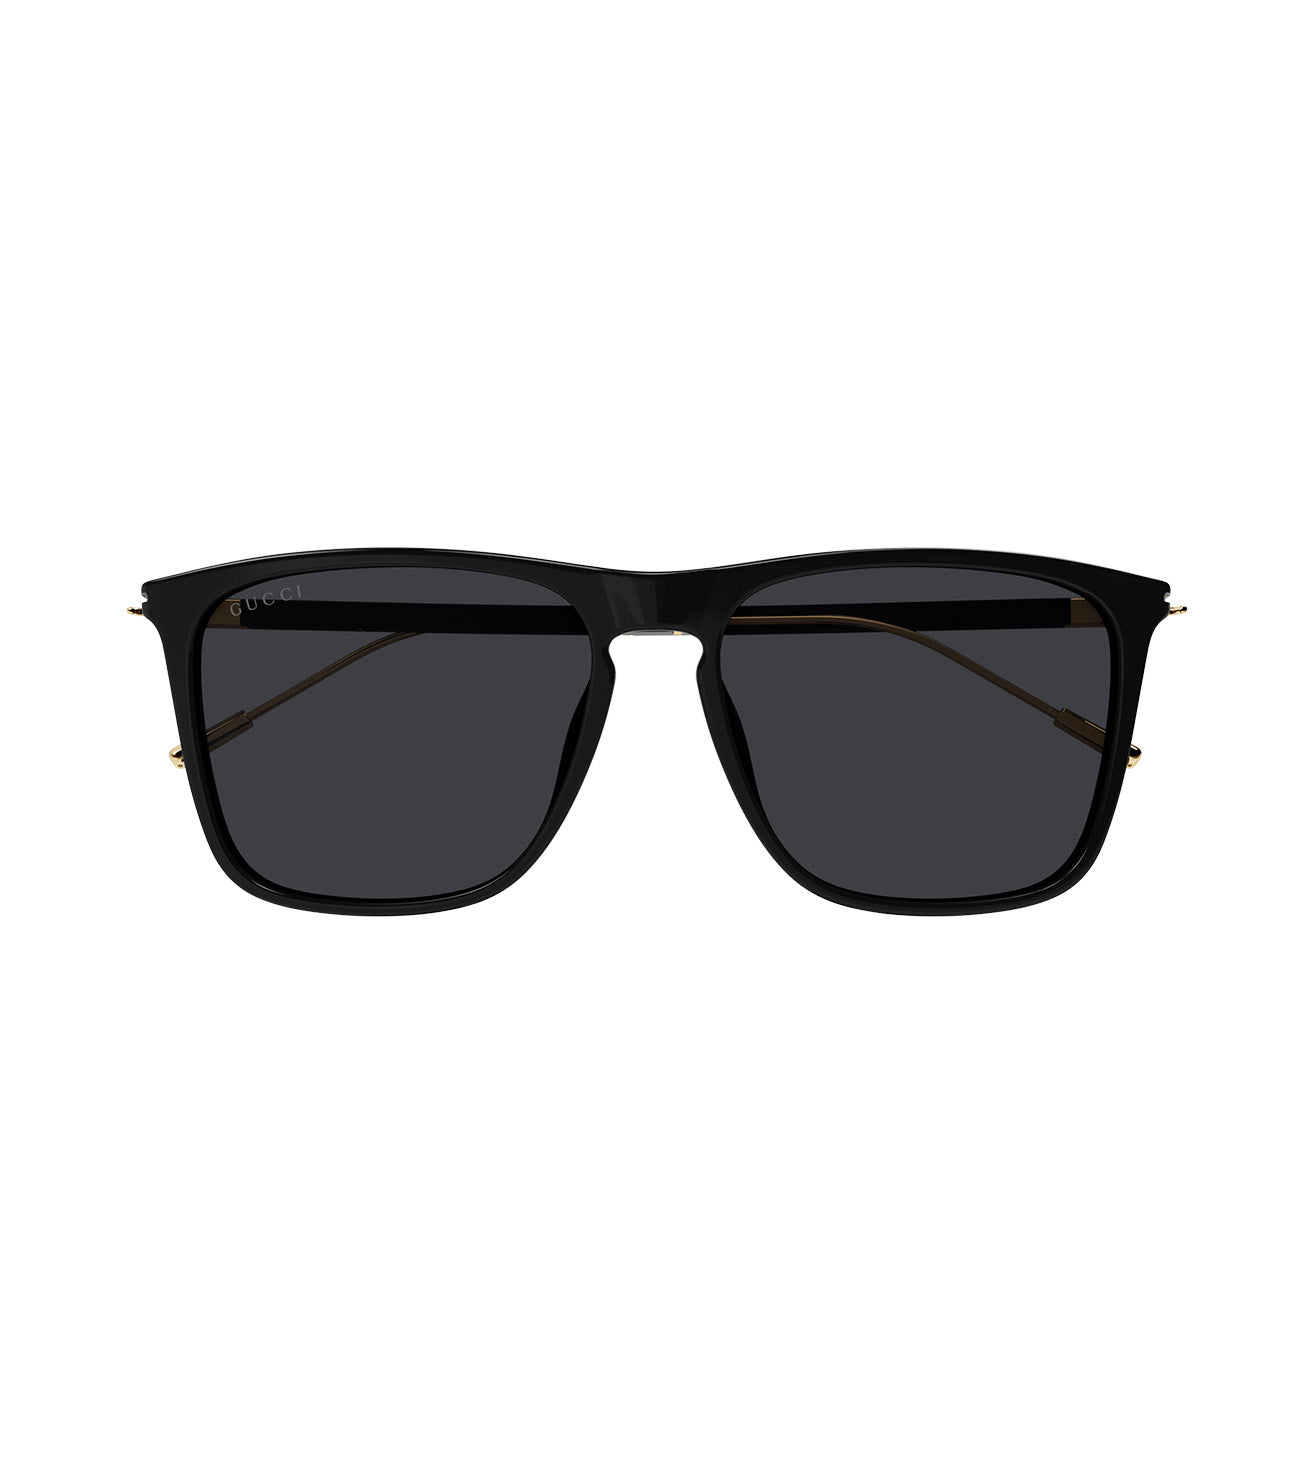 Gucci Men's Grey Wayfarer Sunglasses